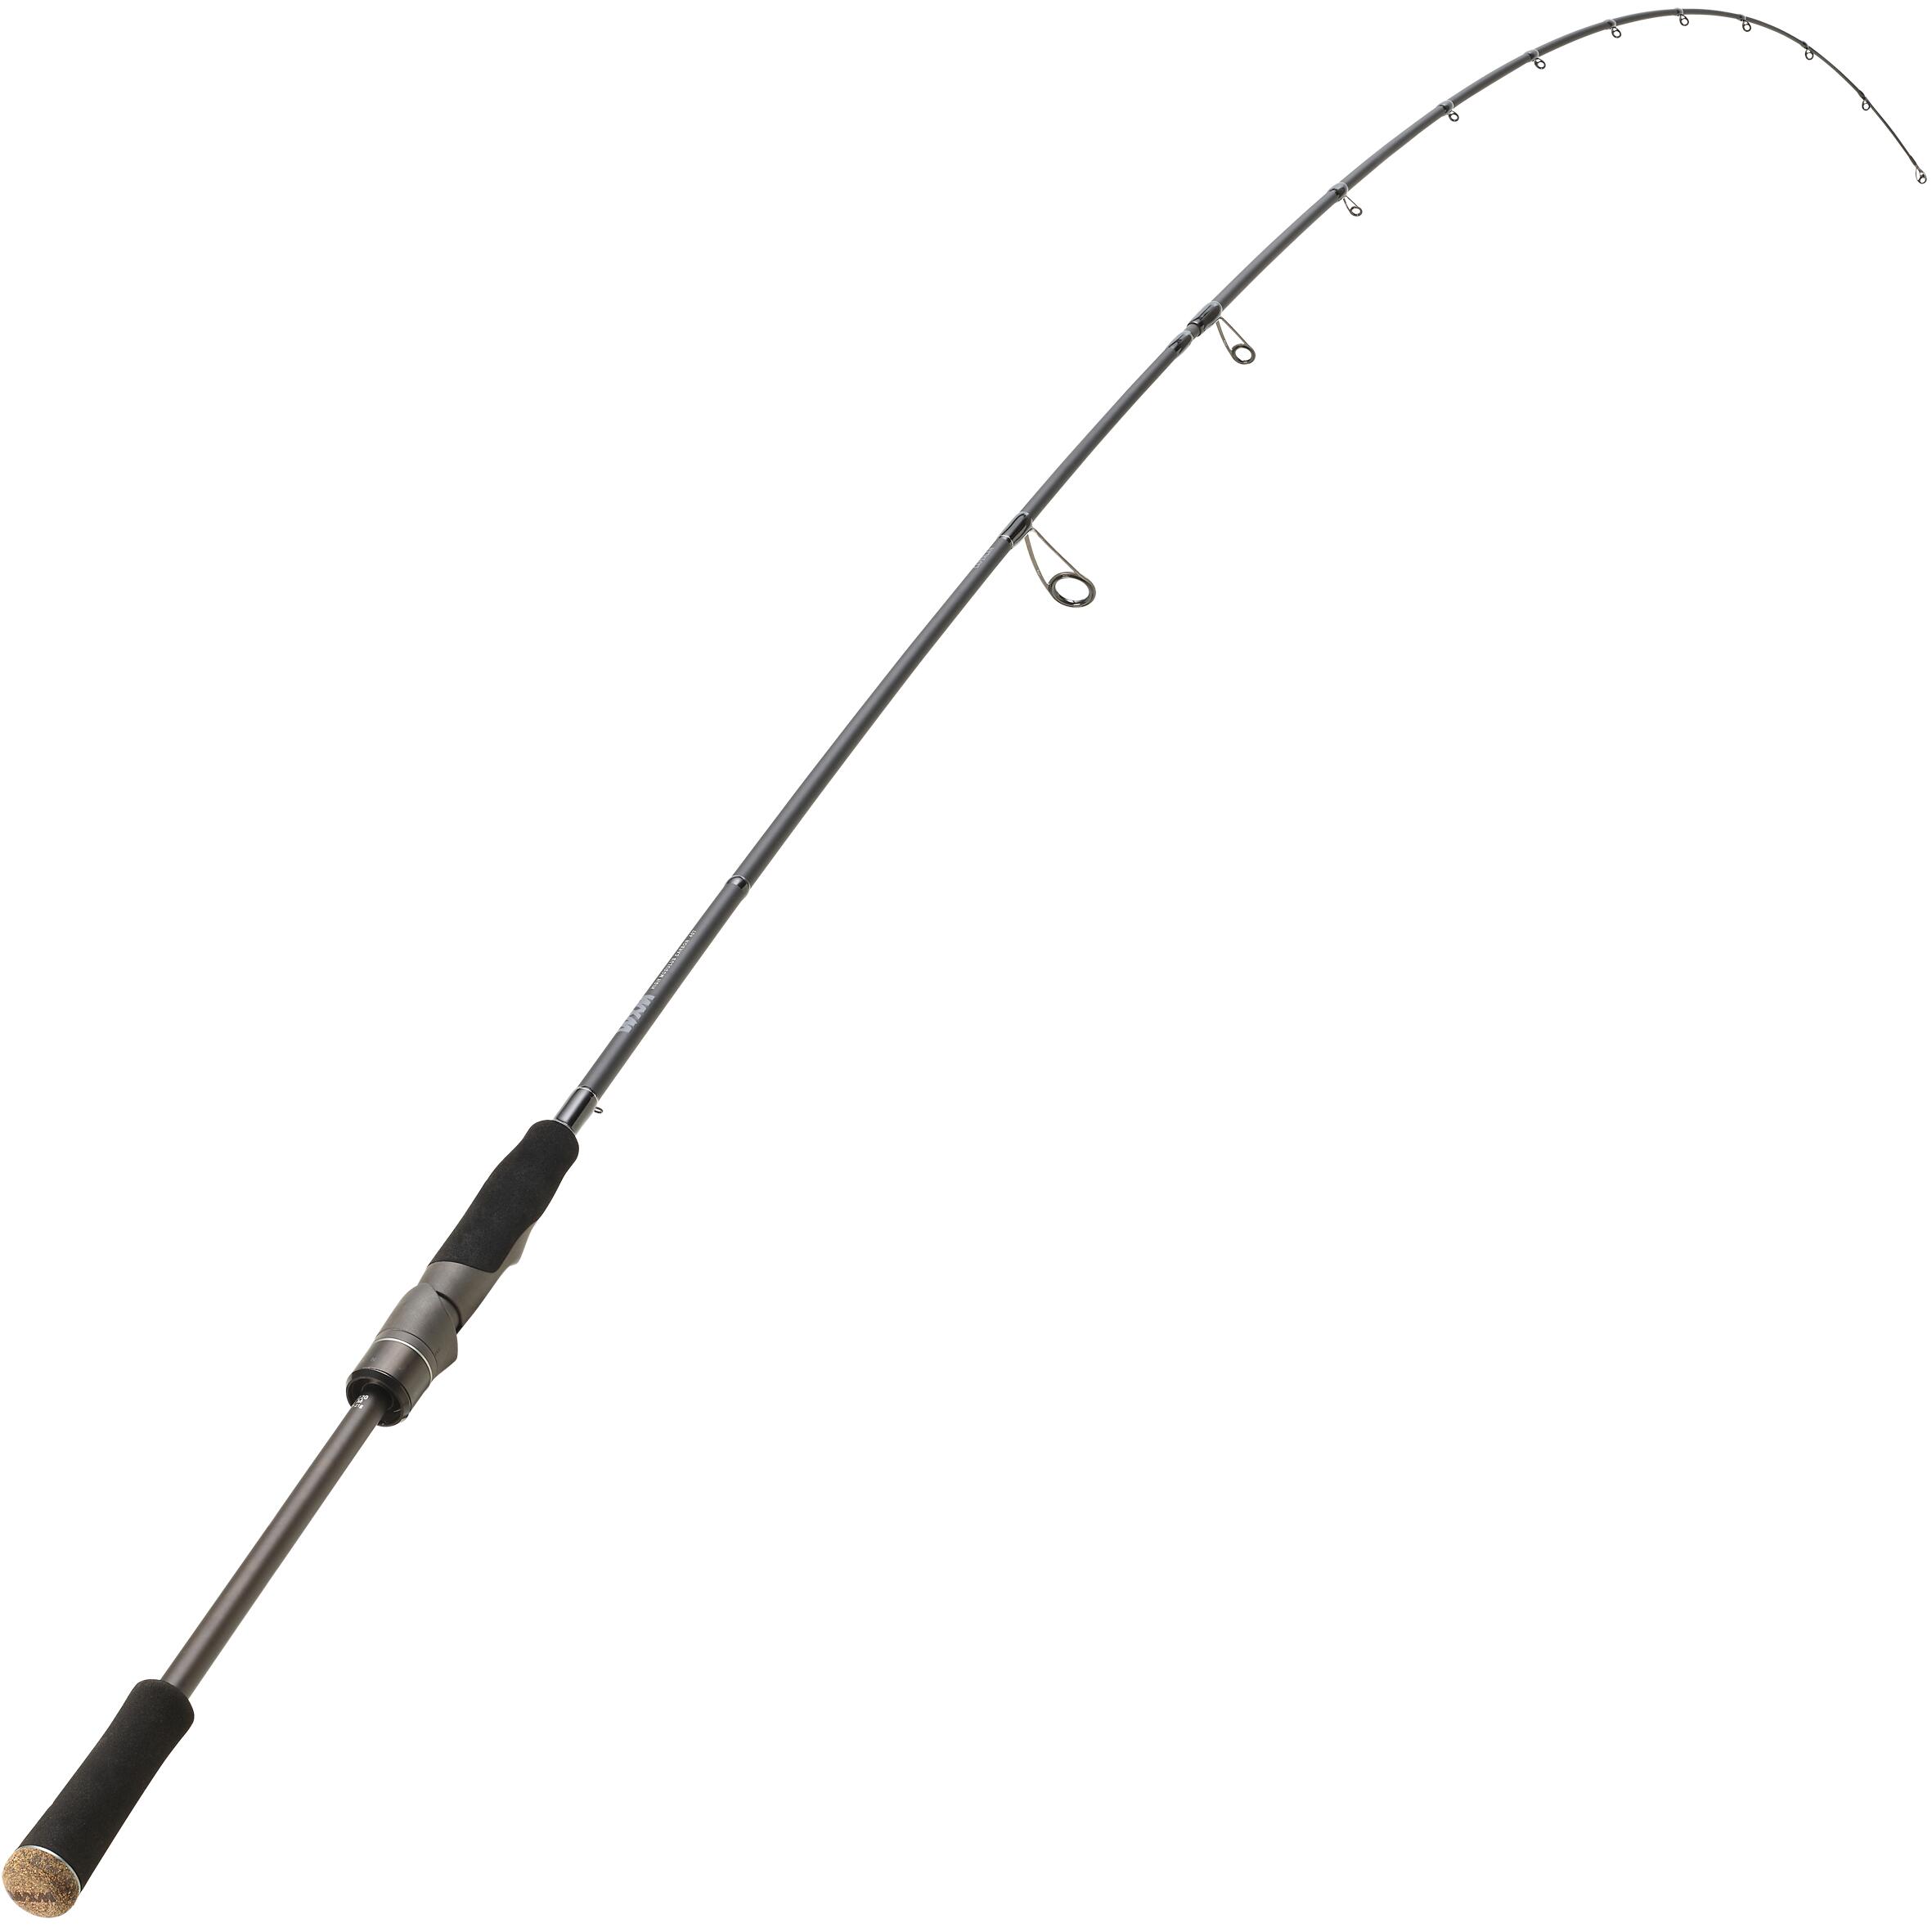 WMX-9 220 M lure fishing rod - CAPERLAN